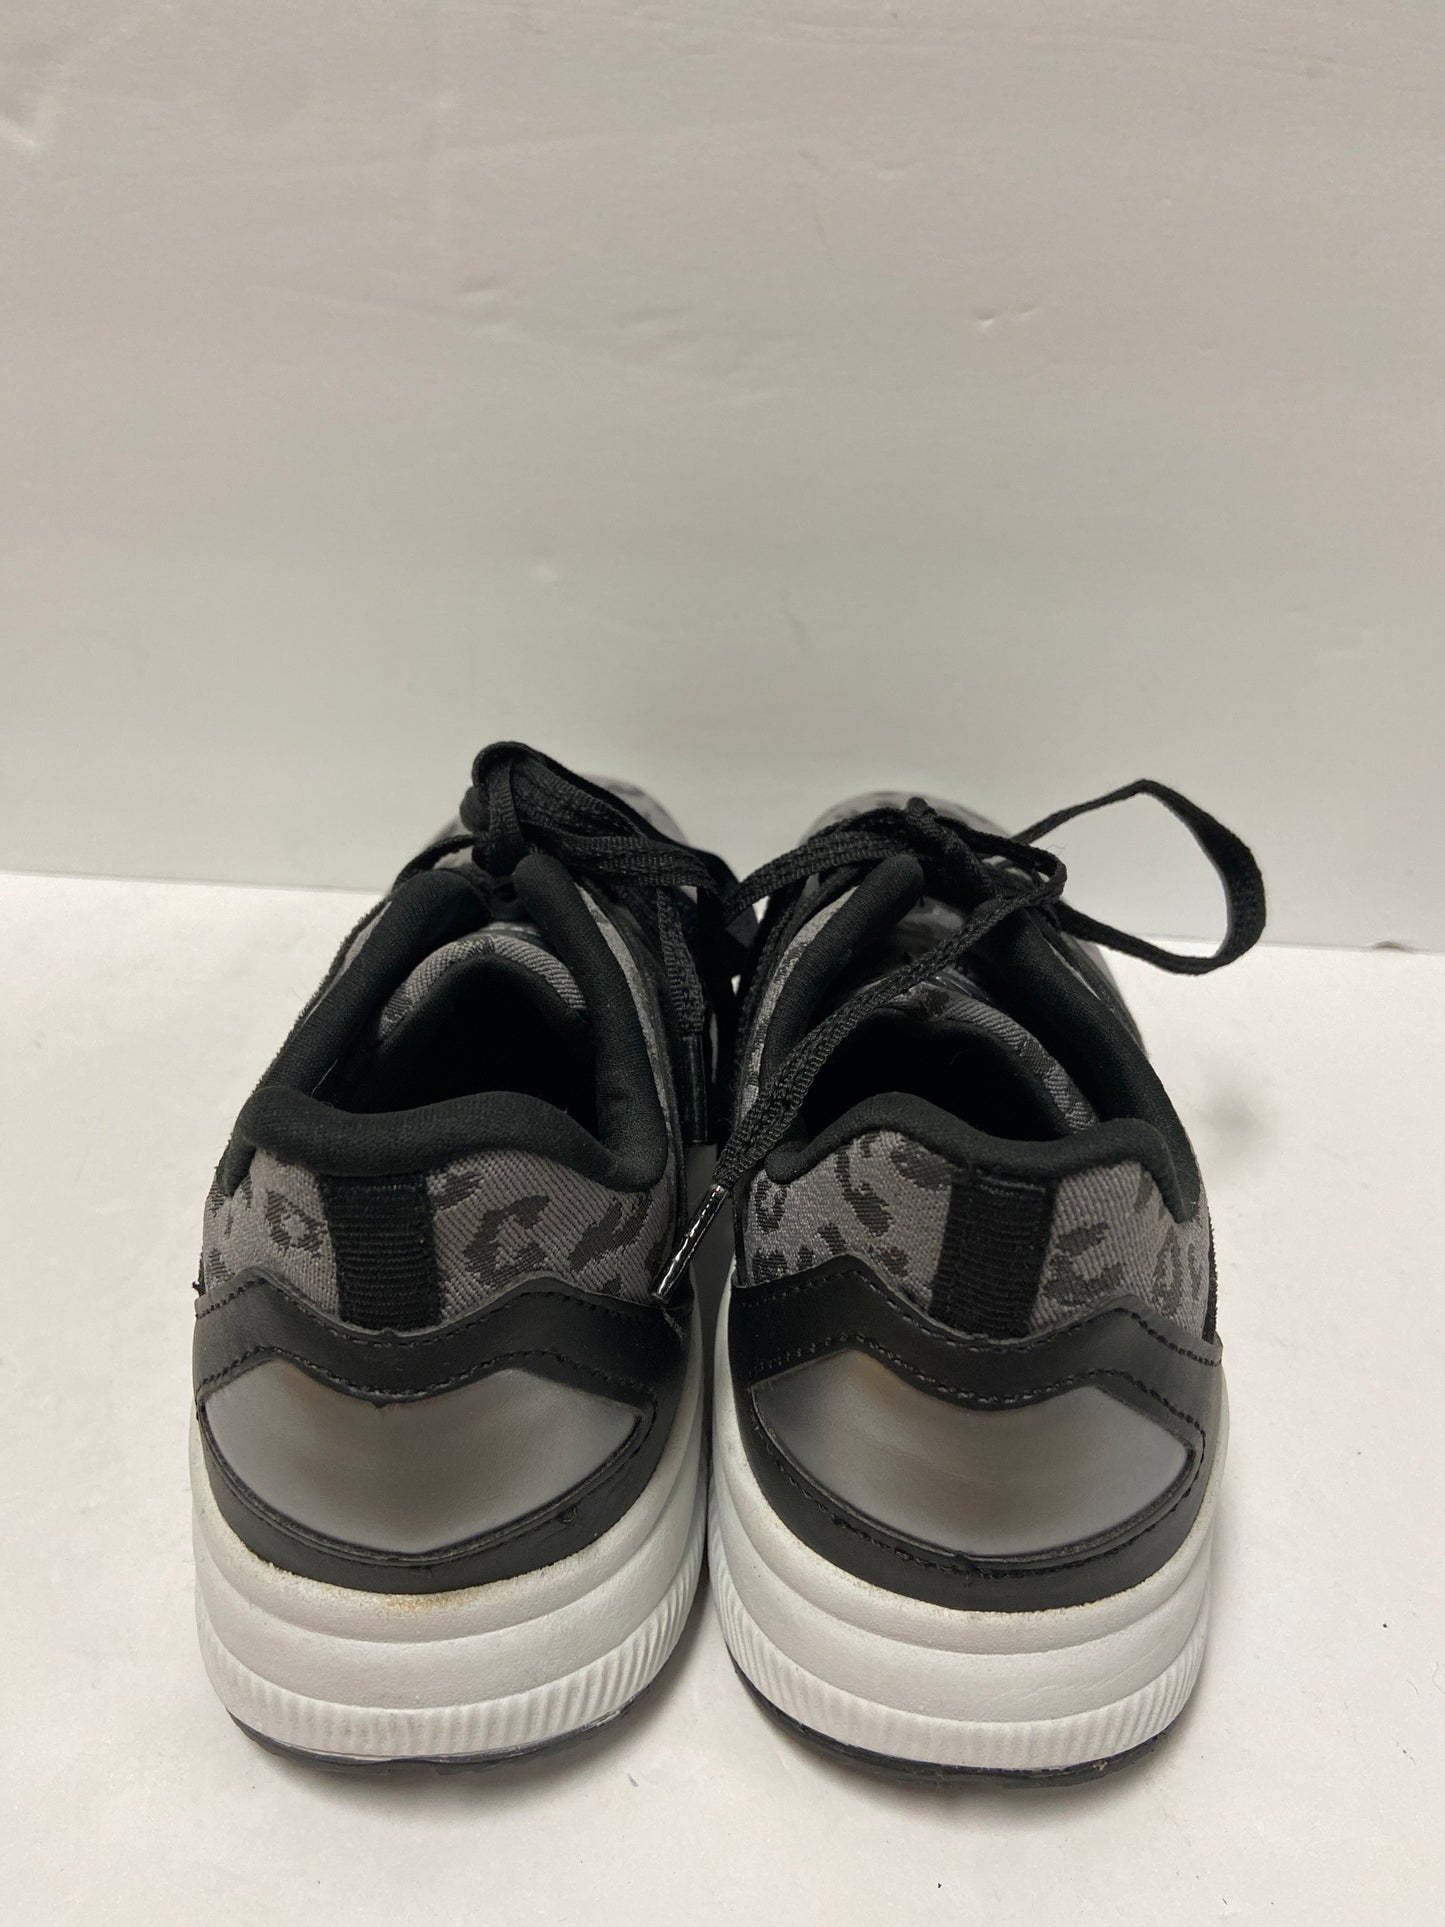 Grey Shoes Athletic Avia, Size 7